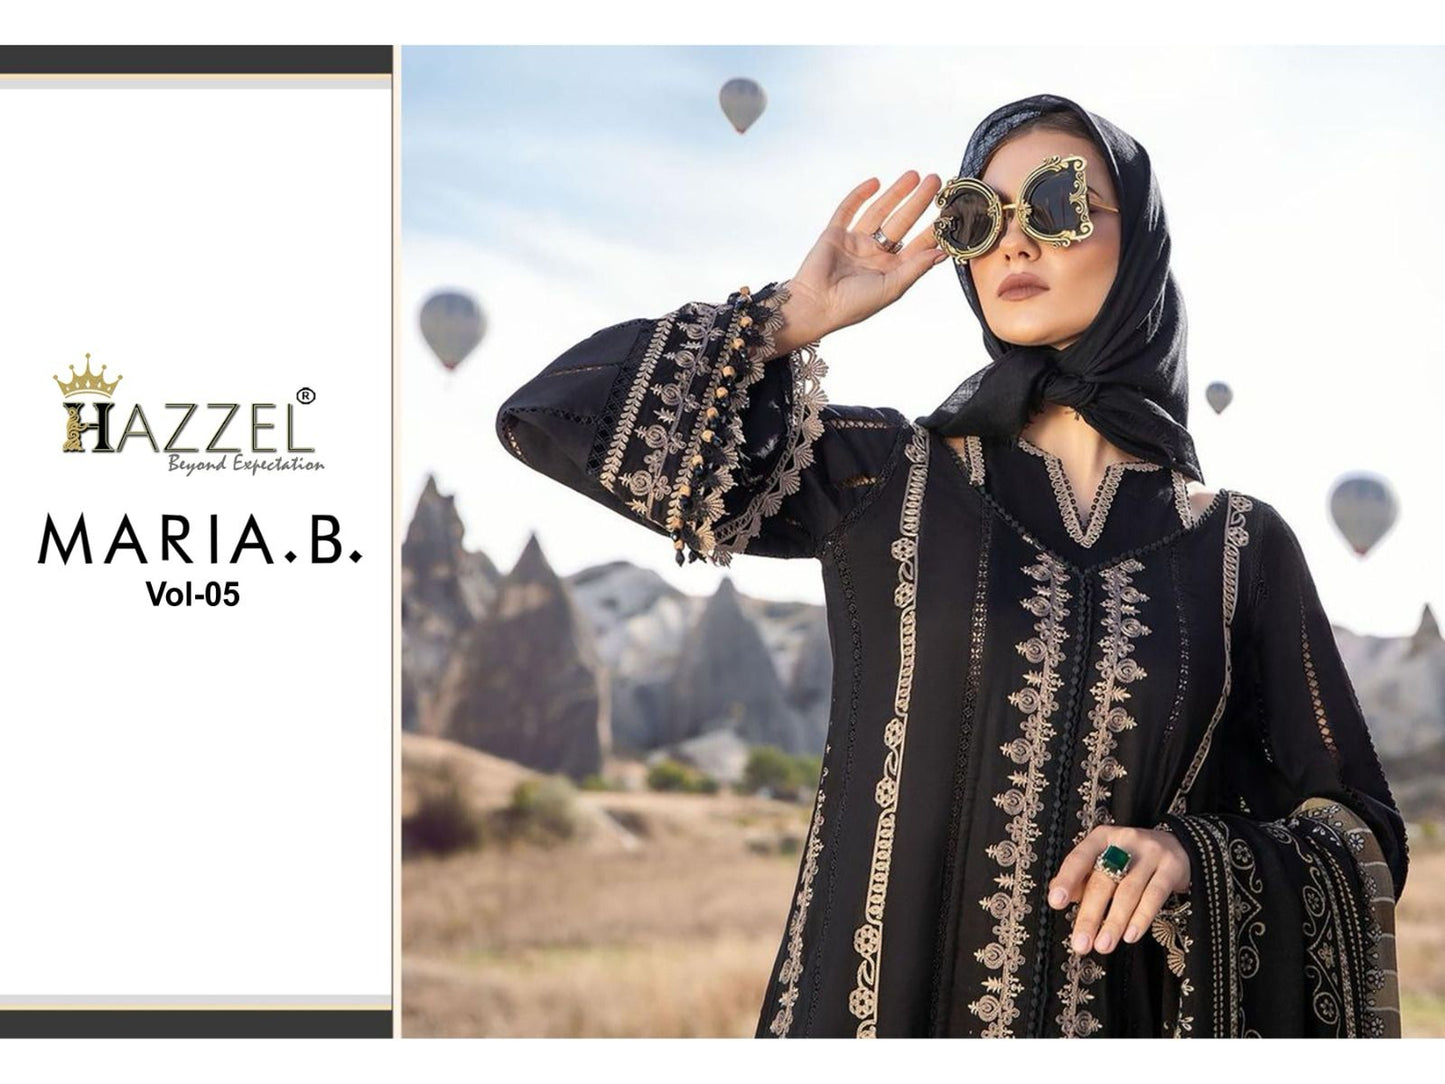 Maria B Vol-5 Hazzel Rayon Cotton Pakistani Salwar Suits